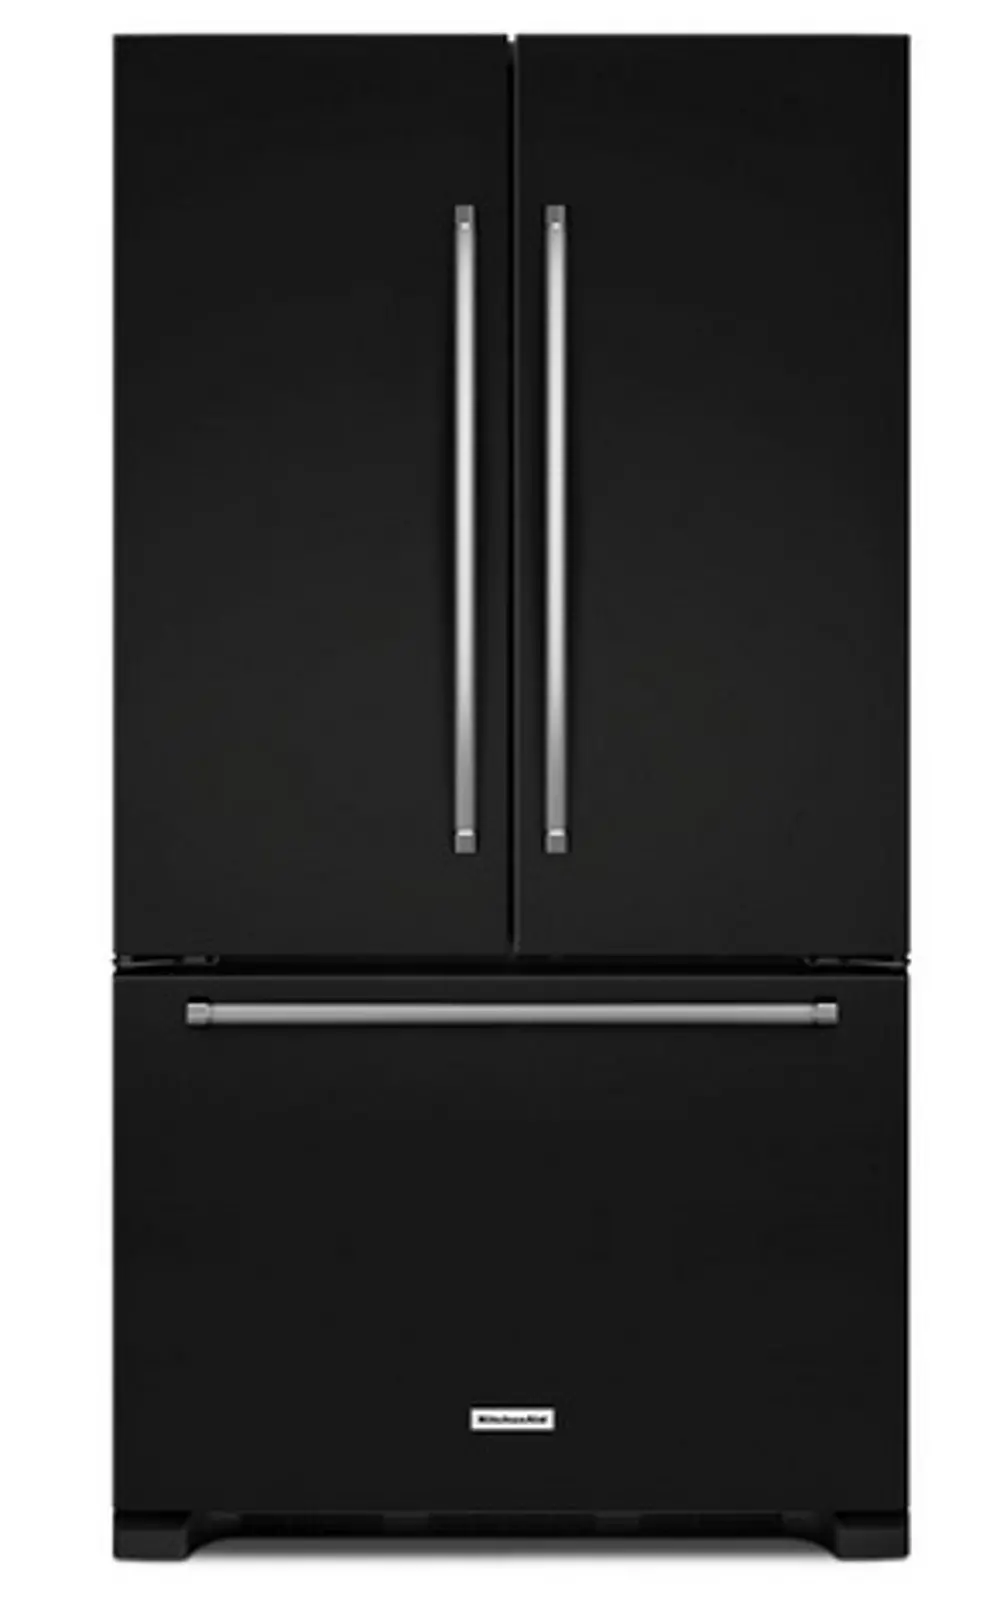 KRFC300EBL KitchenAid Counter Depth French Door Refrigerator - 20 cu. ft., 36 Inch Black-1